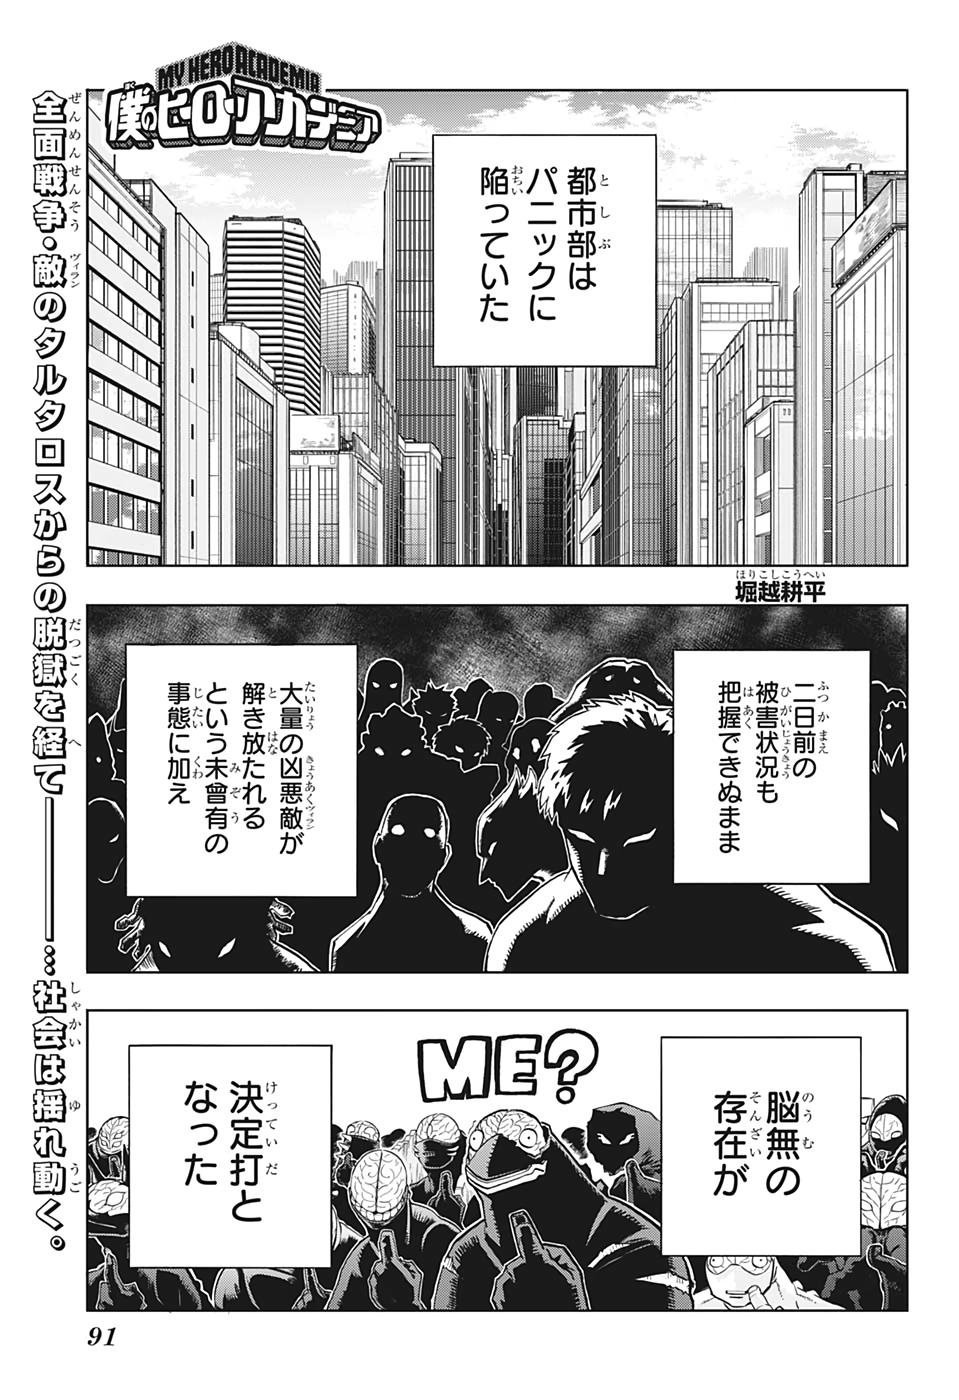 Boku no Hero Academia - Chapter 300 - Page 1